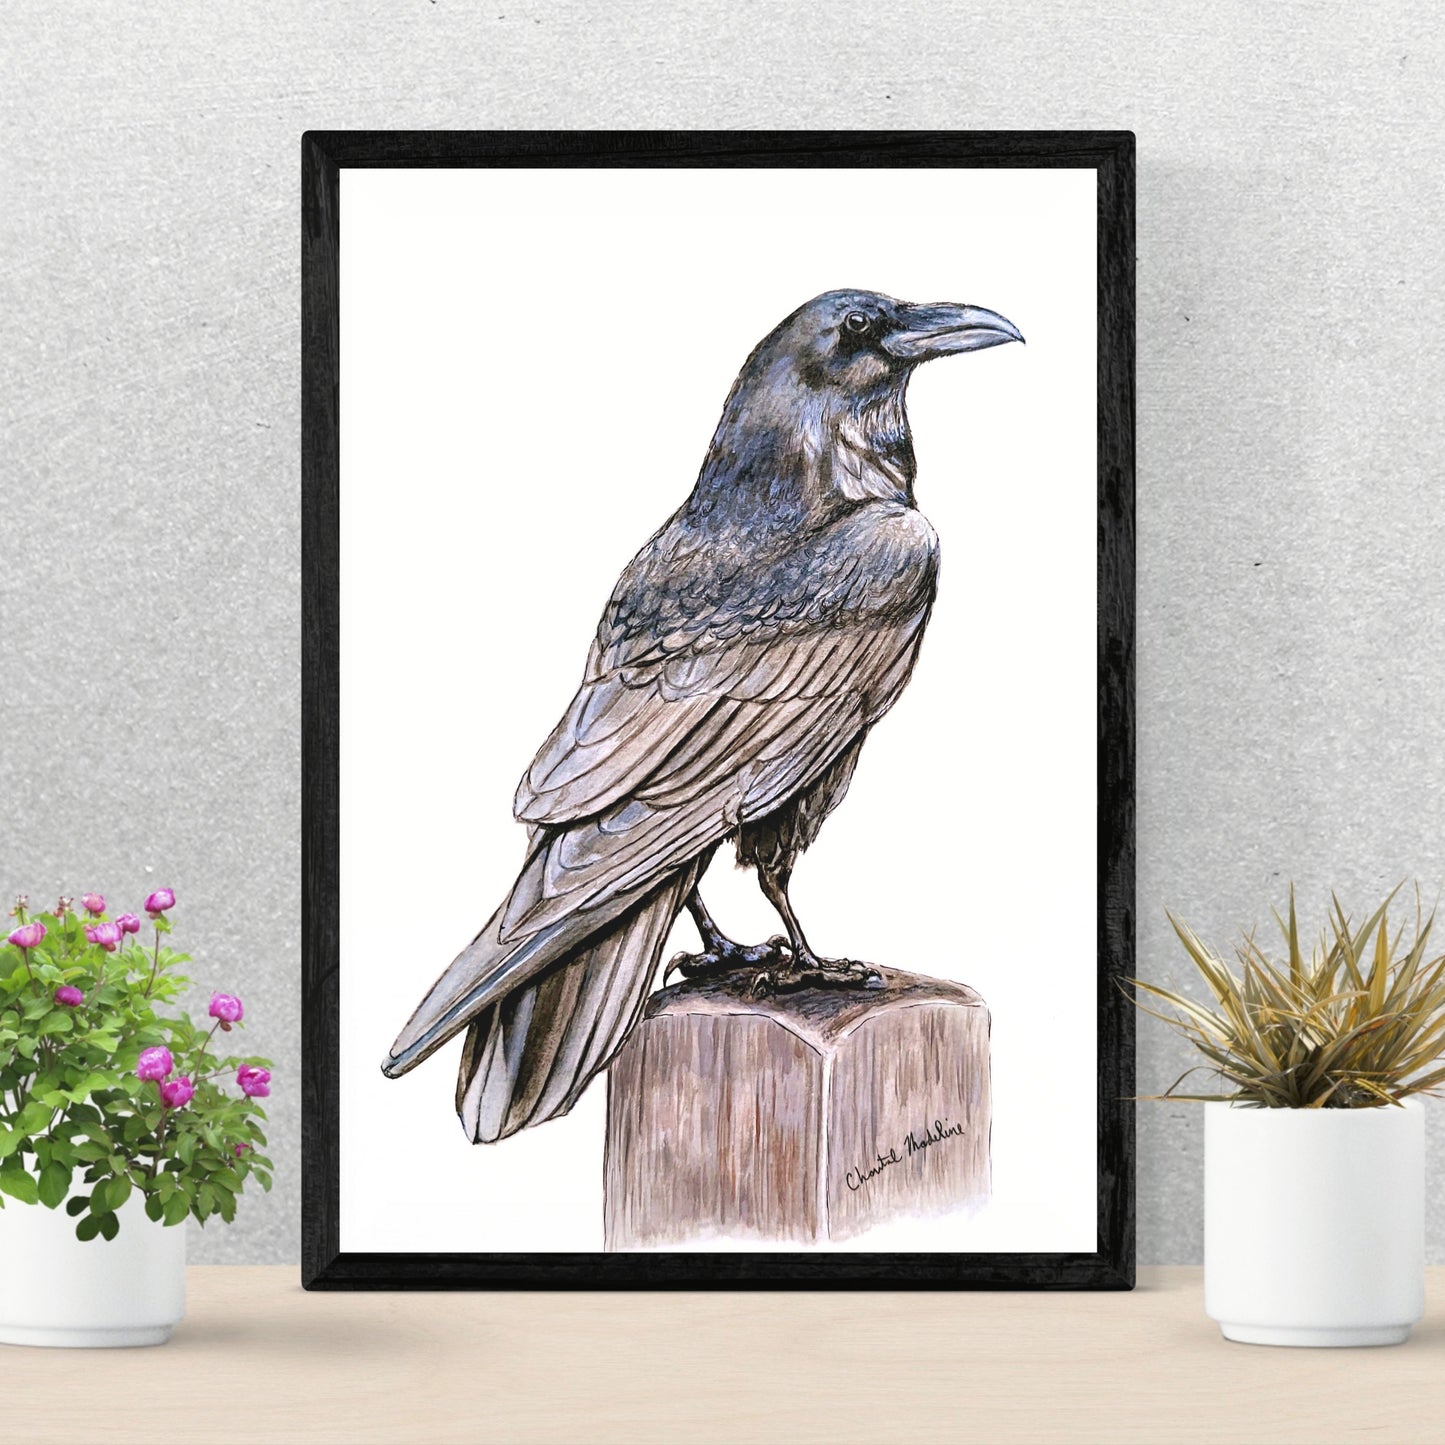 Raven art print, Wildlife art print, Giclee print on fine art paper